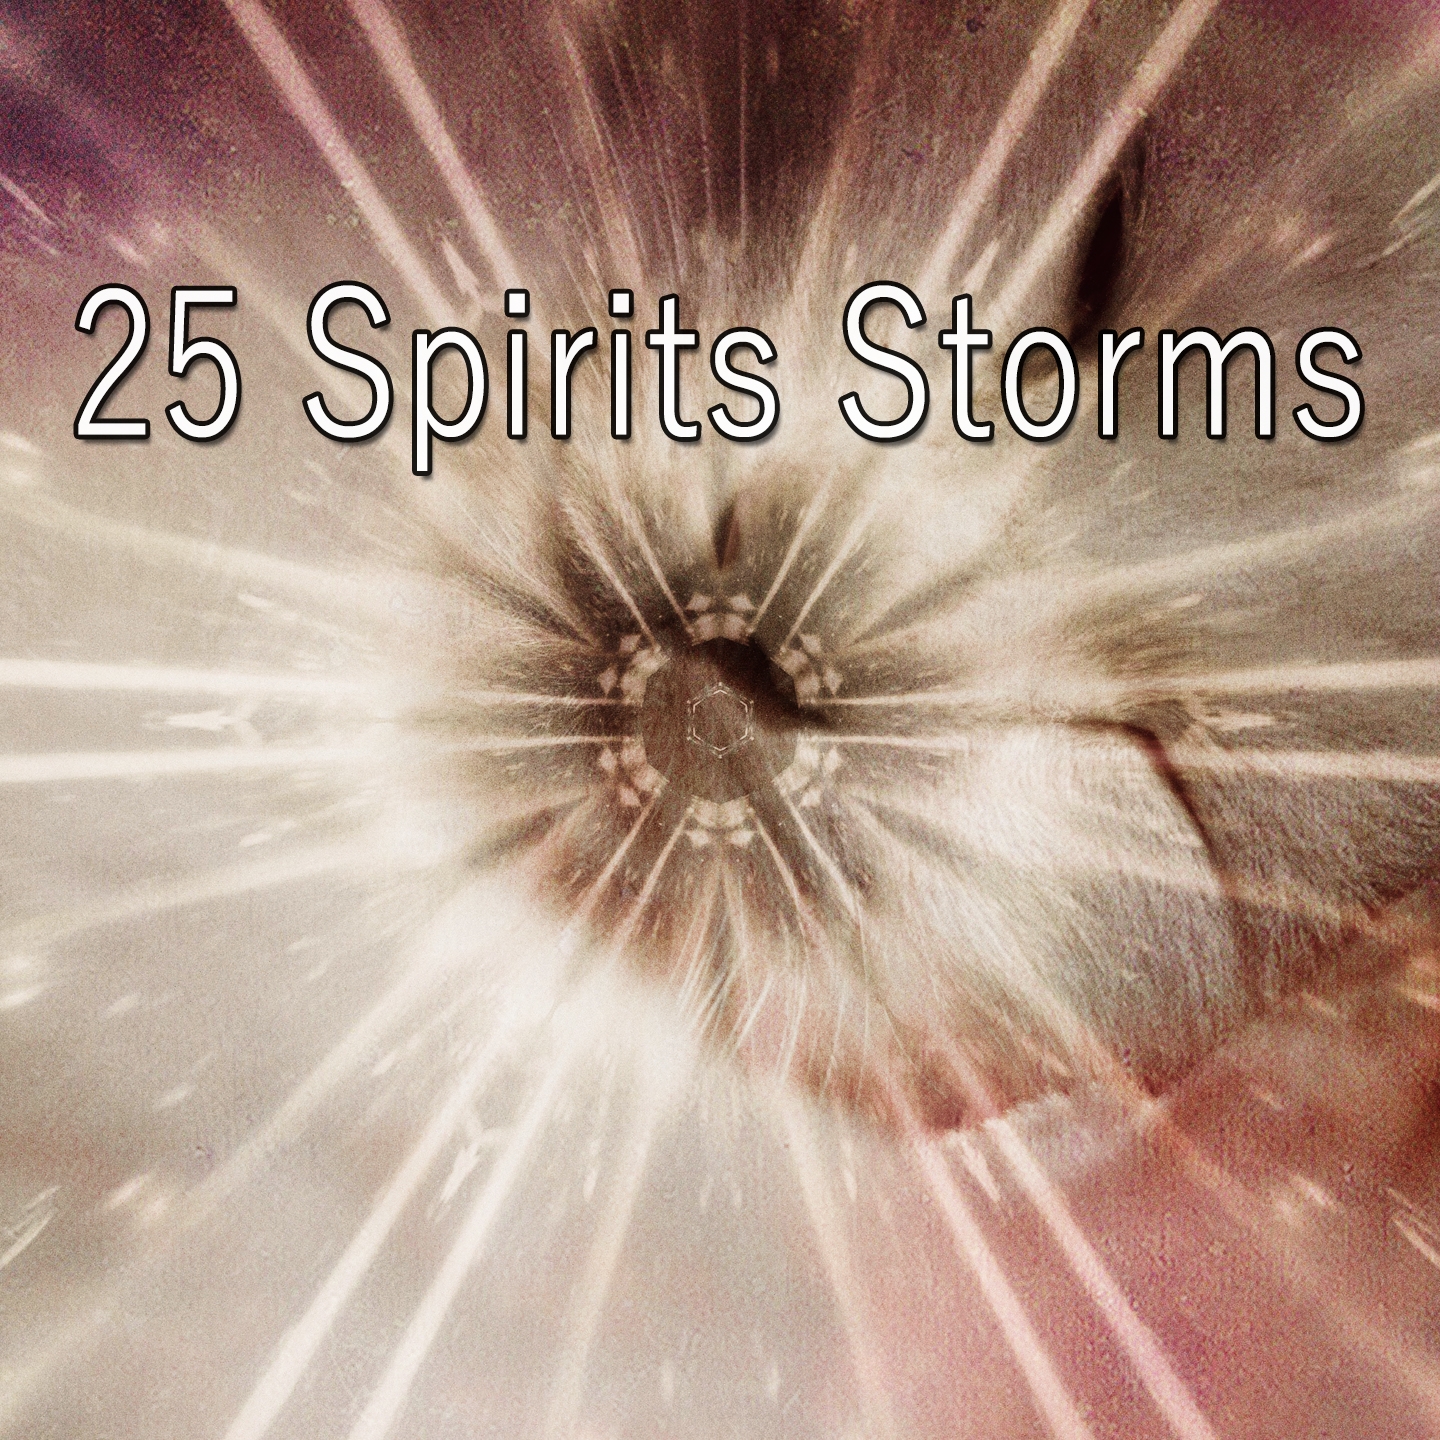 25 Spirits Storms